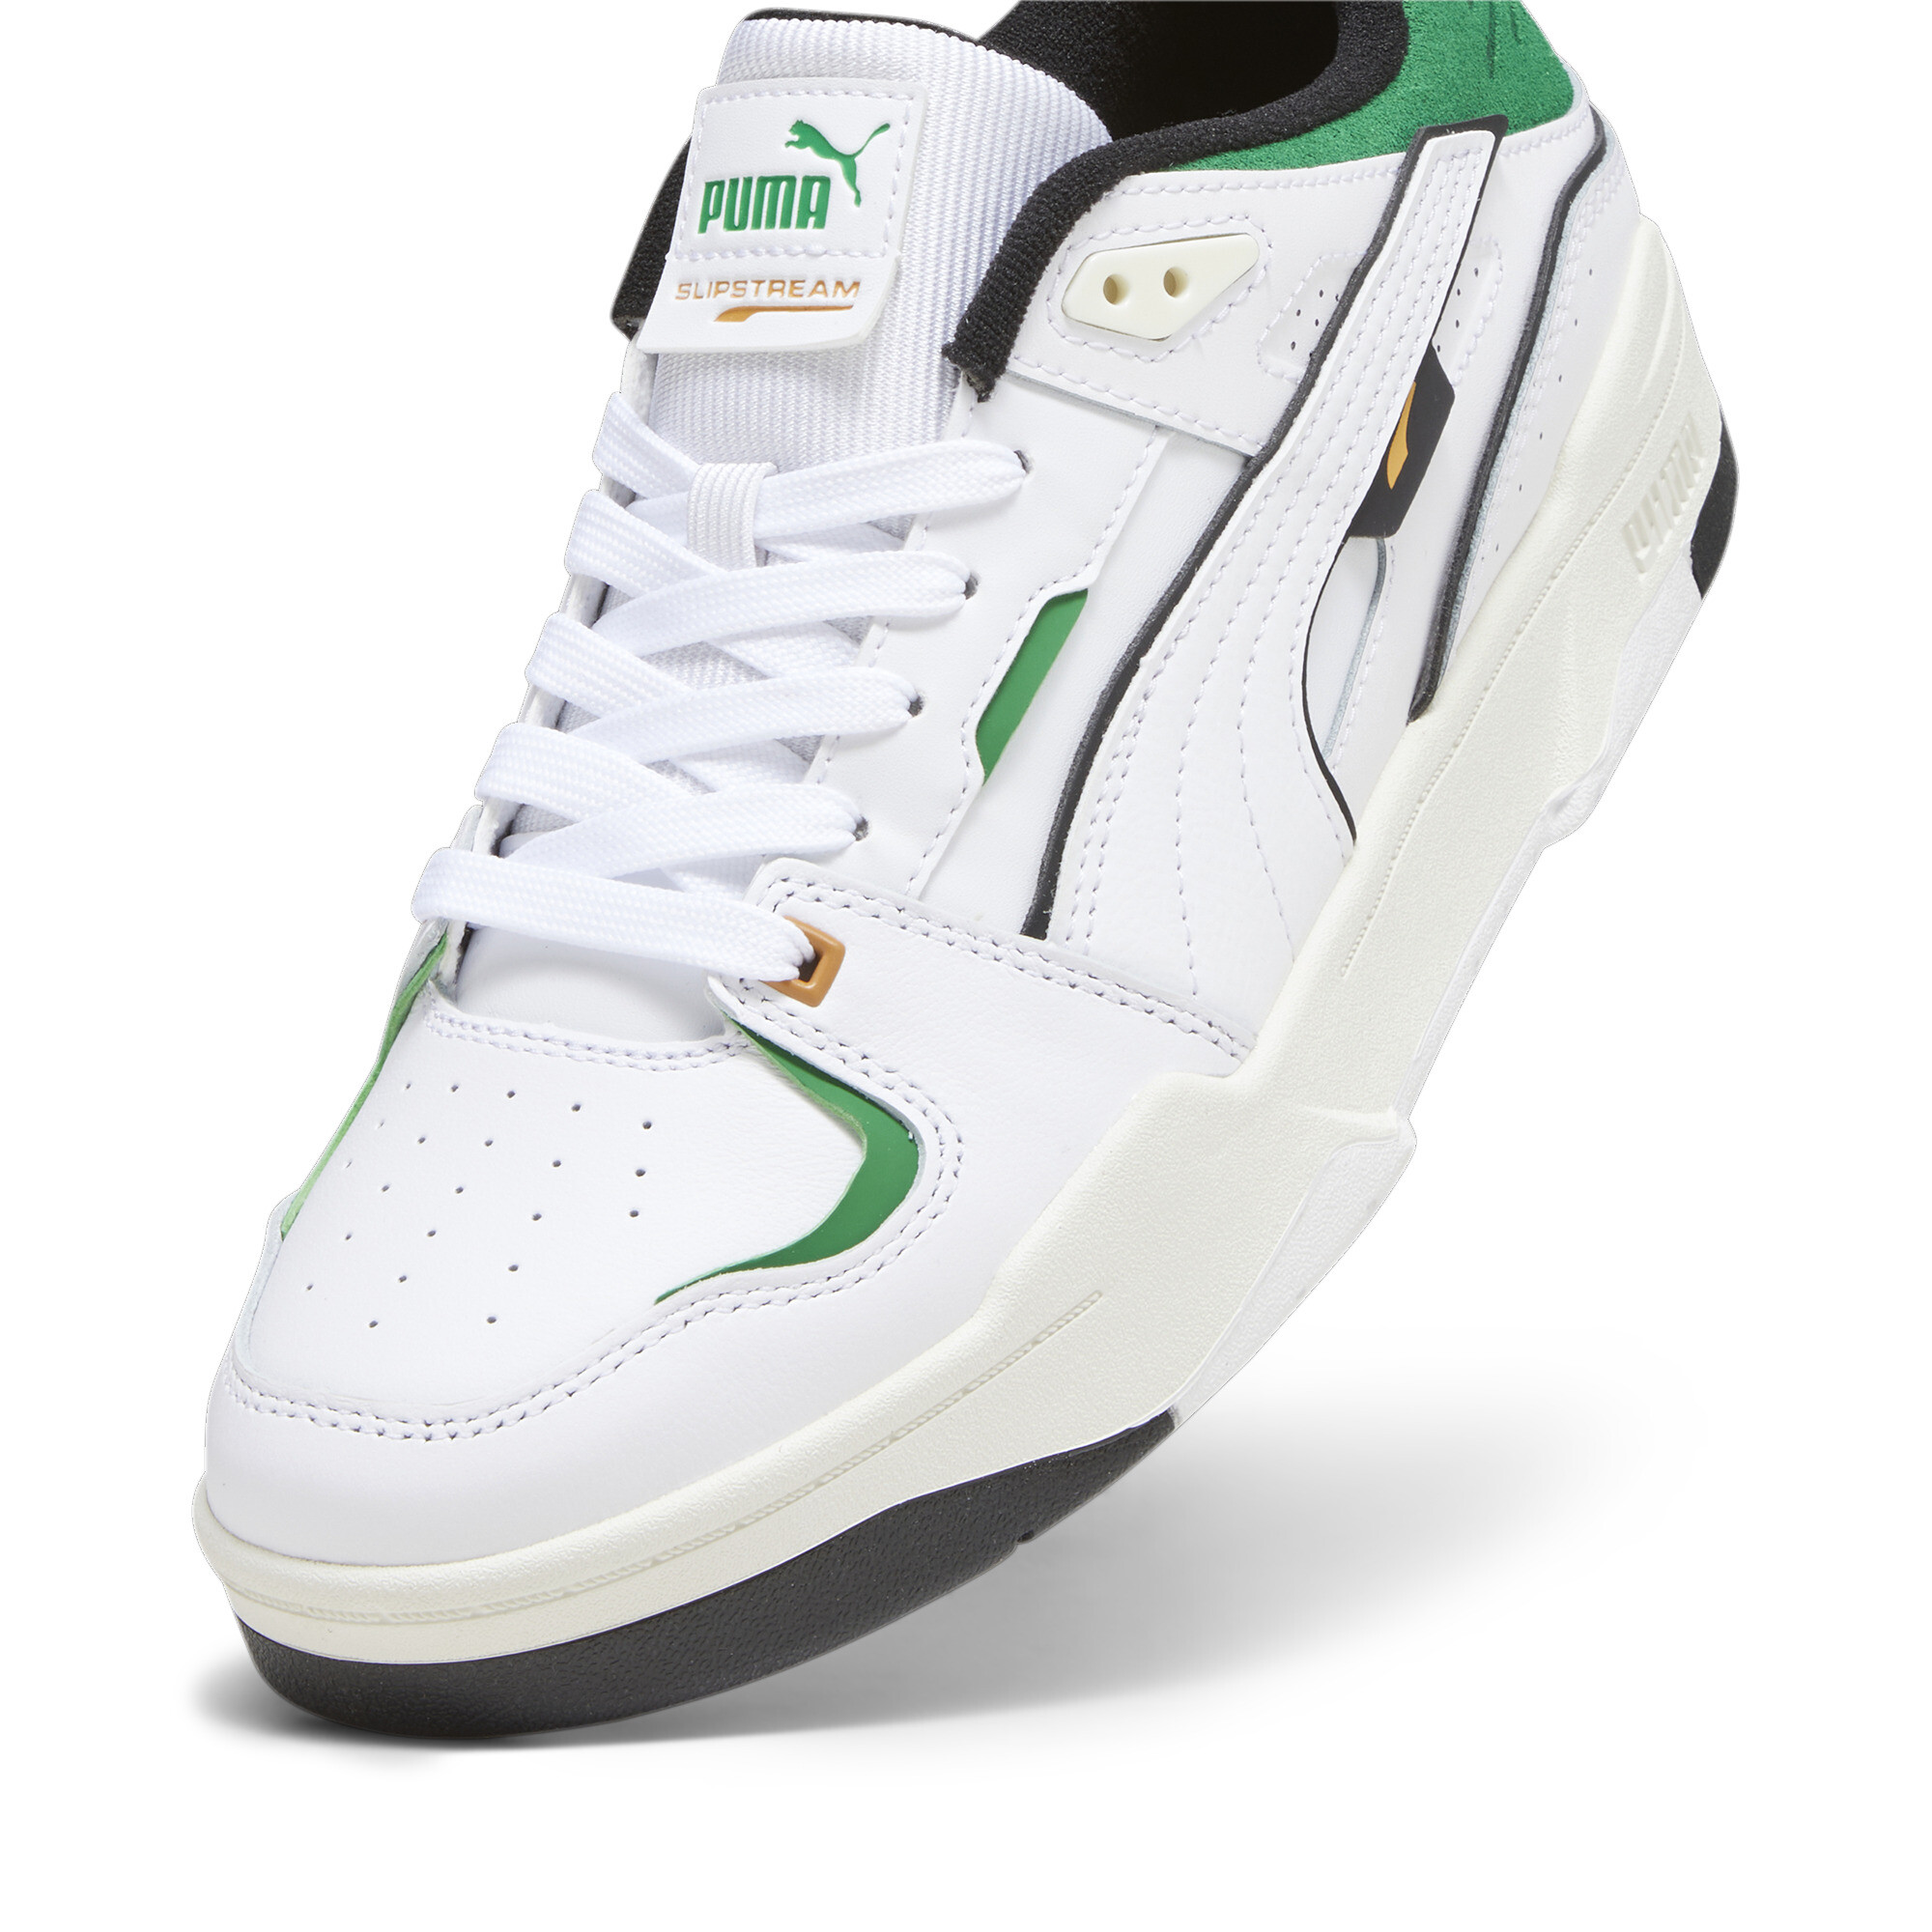 Men's PUMA Slipstream Bball Sneakers In White, Size EU 42